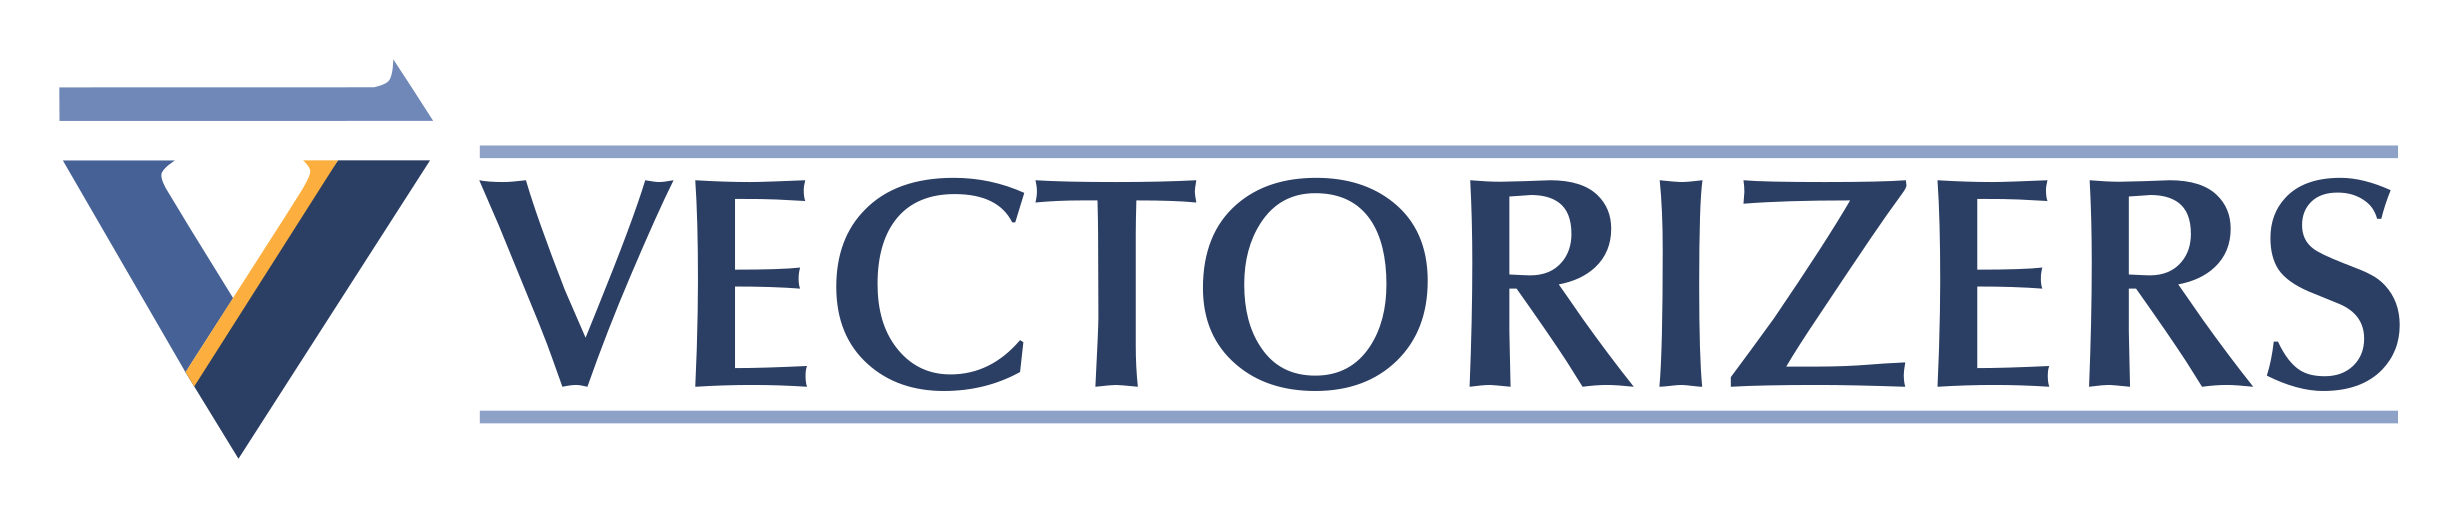 Vectorizers Logo